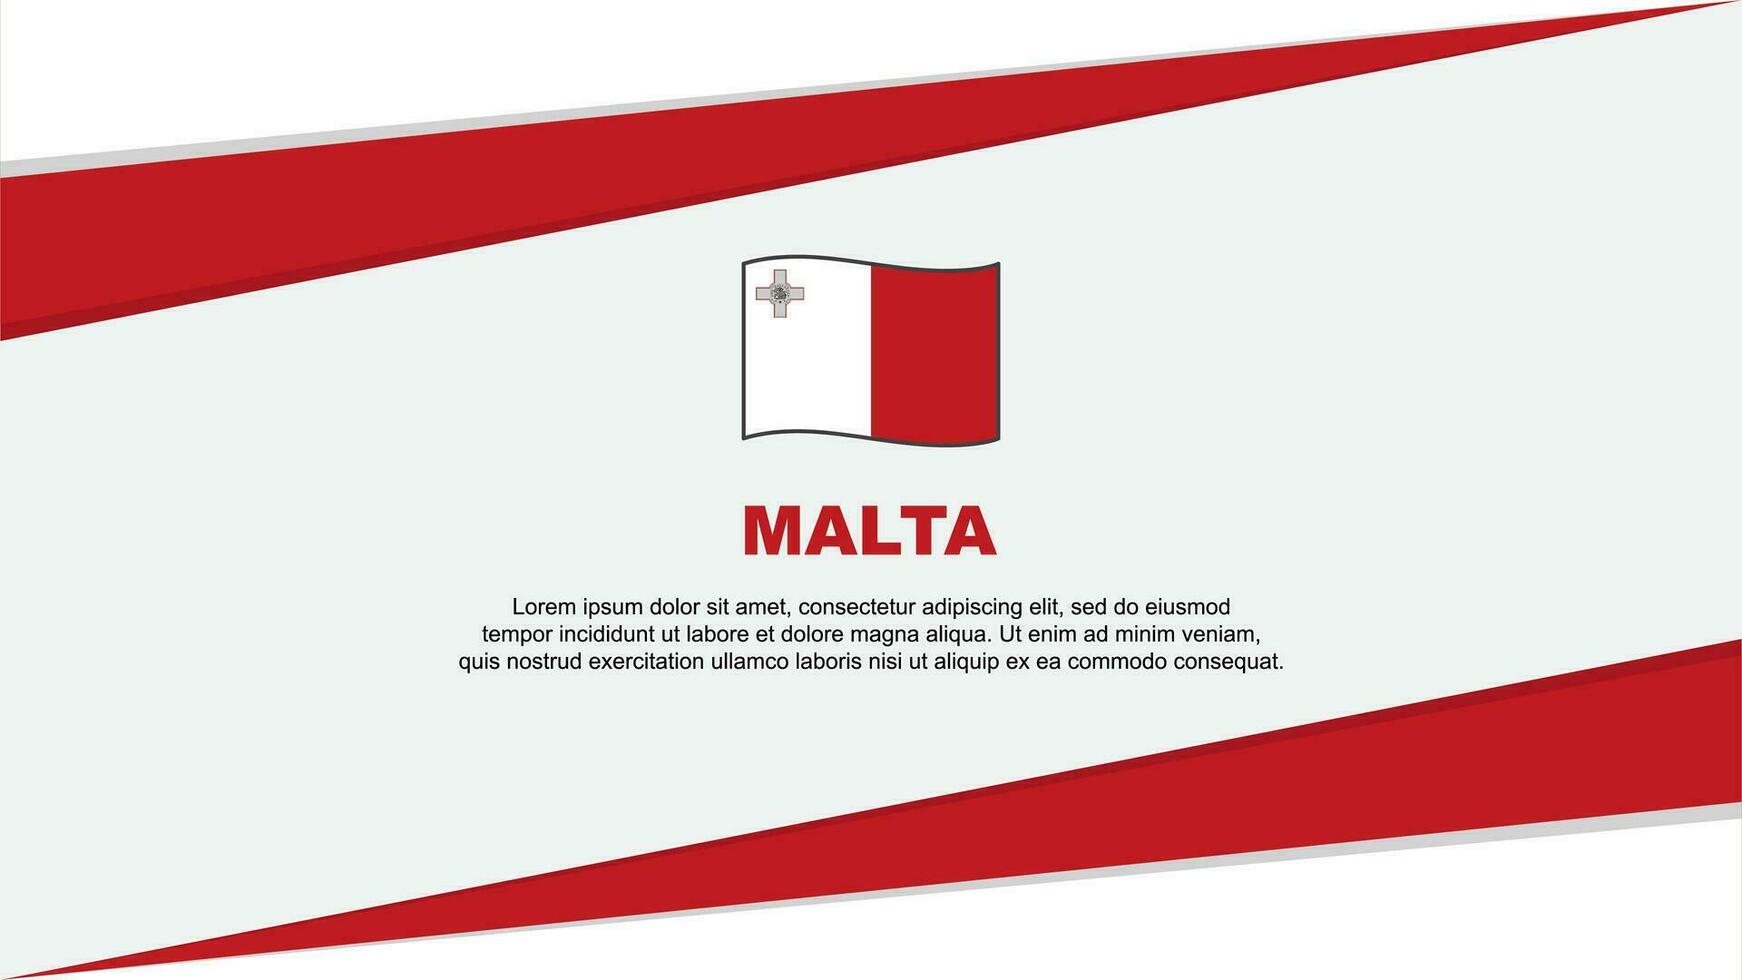 Malta Flag Abstract Background Design Template. Malta Independence Day Banner Cartoon Vector Illustration. Malta Design